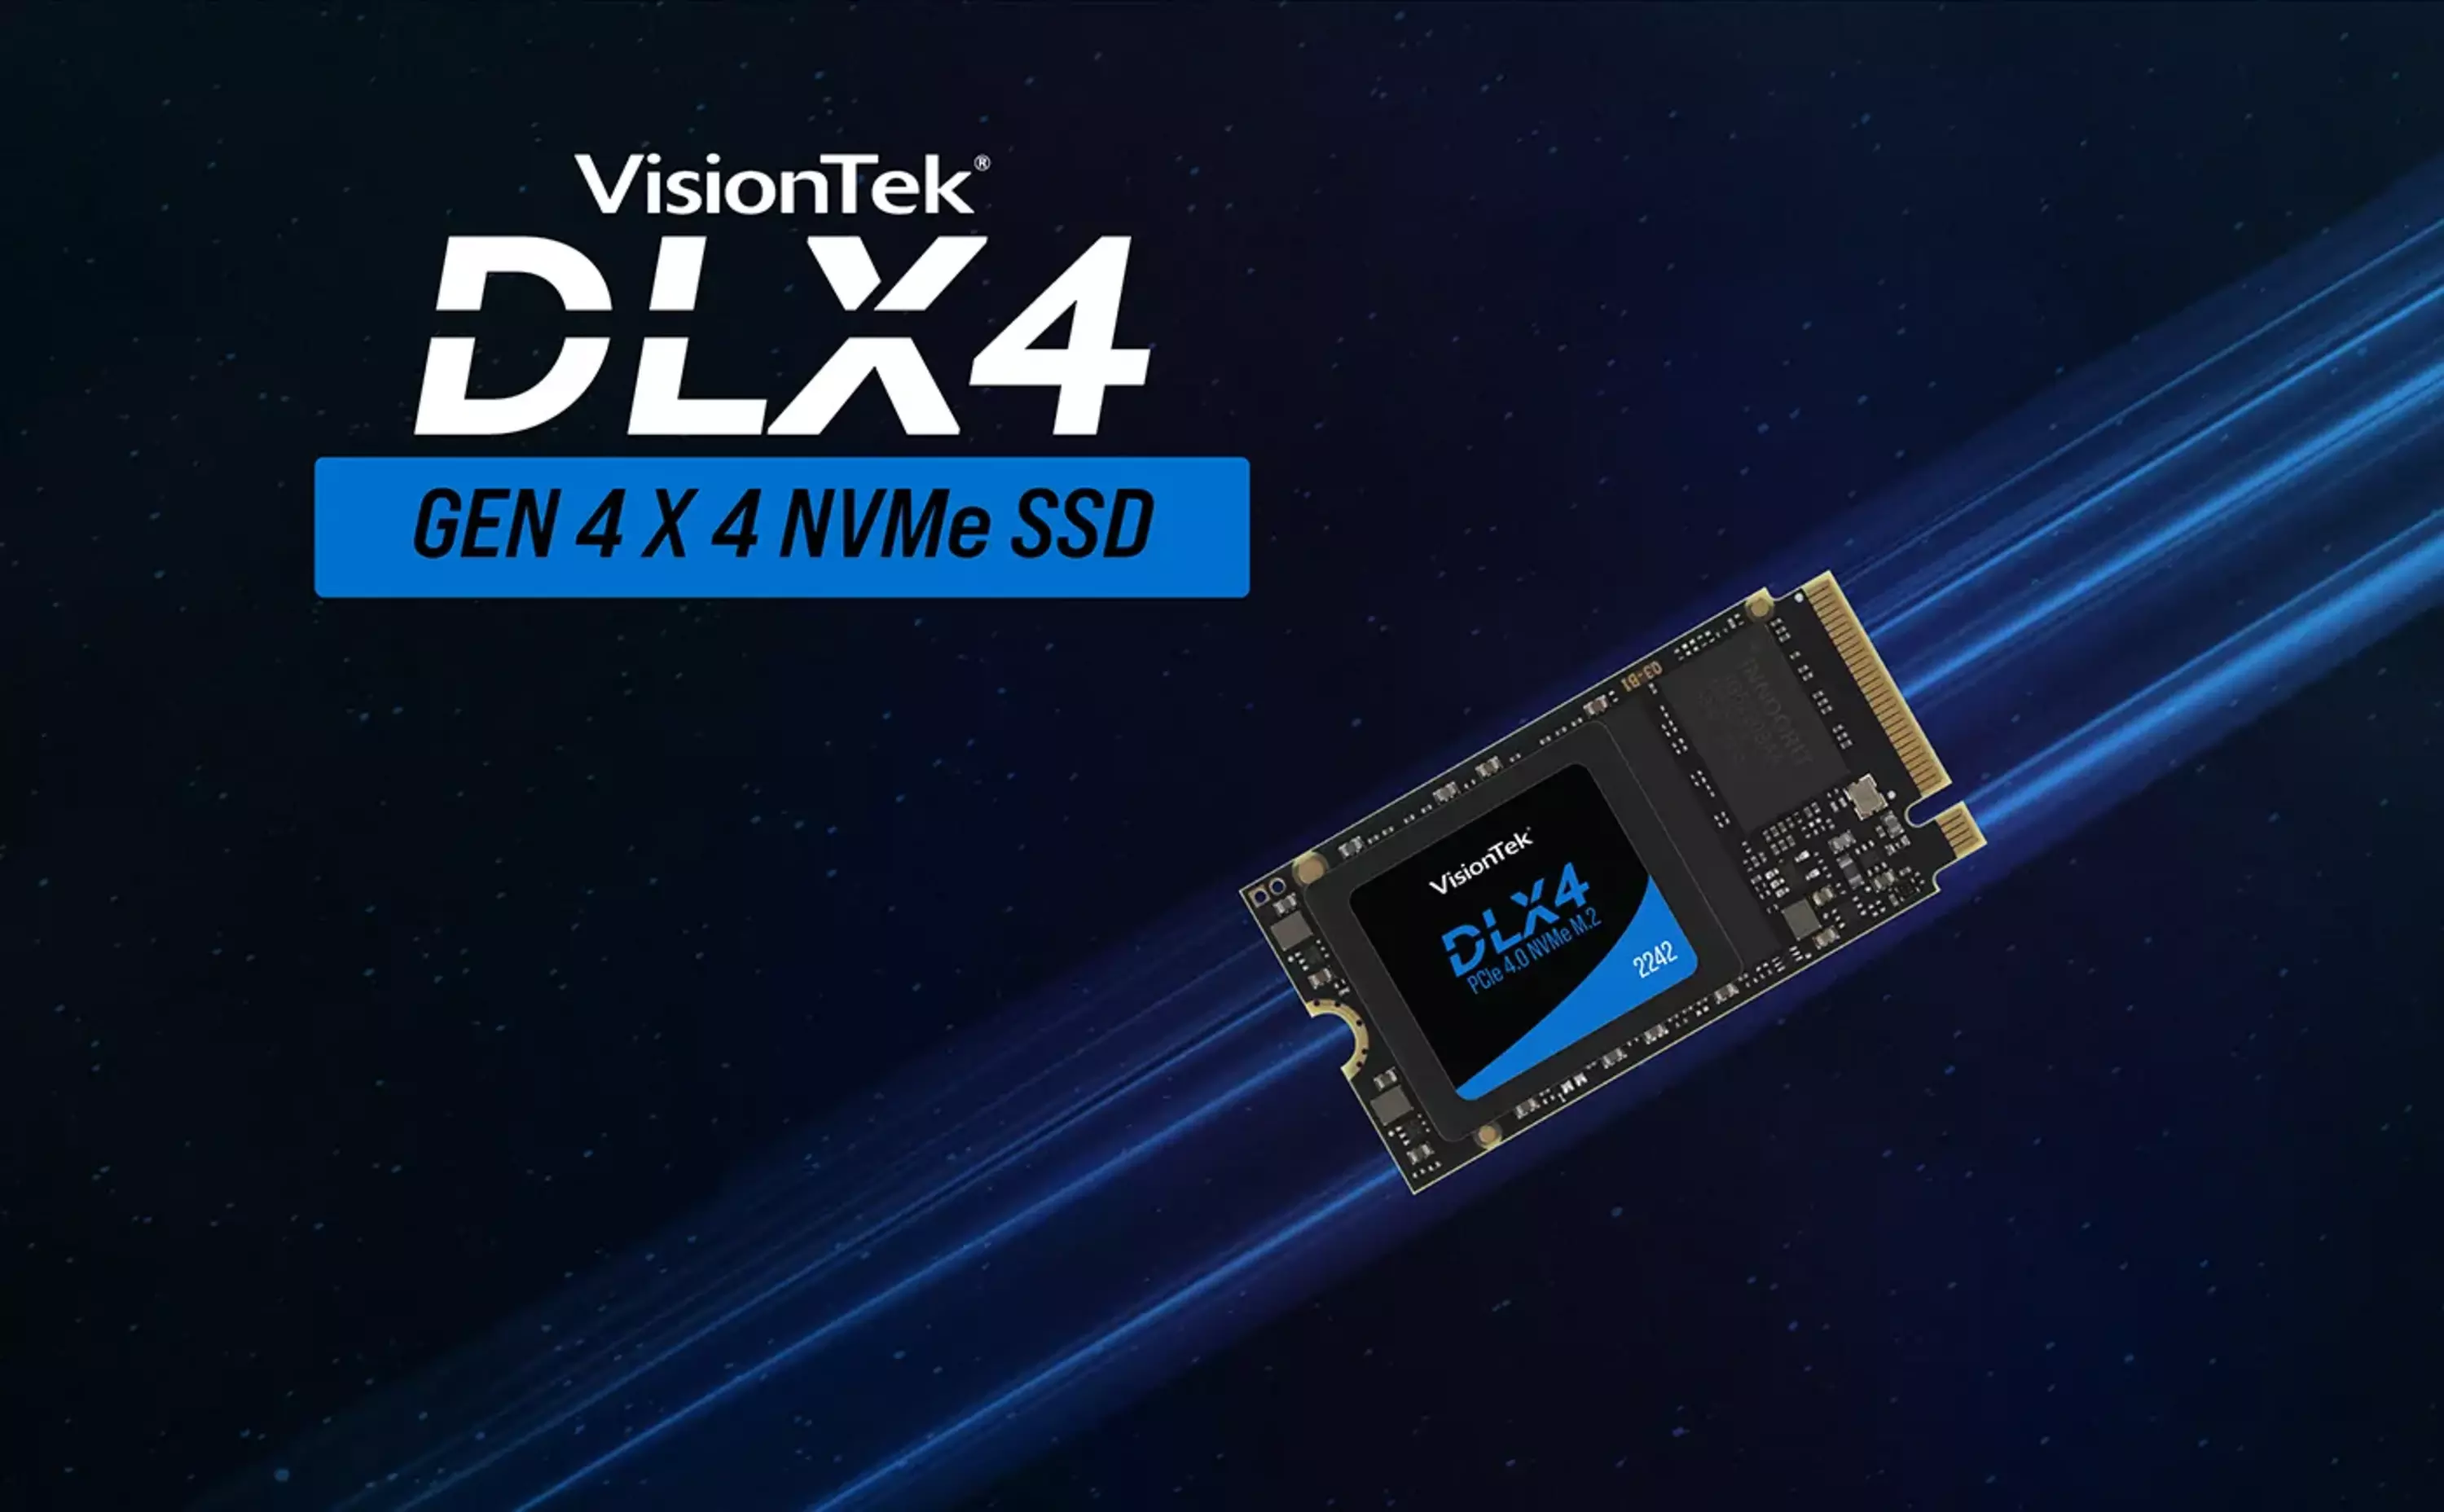 VisionTek DLX4 2242 M.2 PCIe 4.0 x4 SSD (NVMe) Opal 2.0 SED